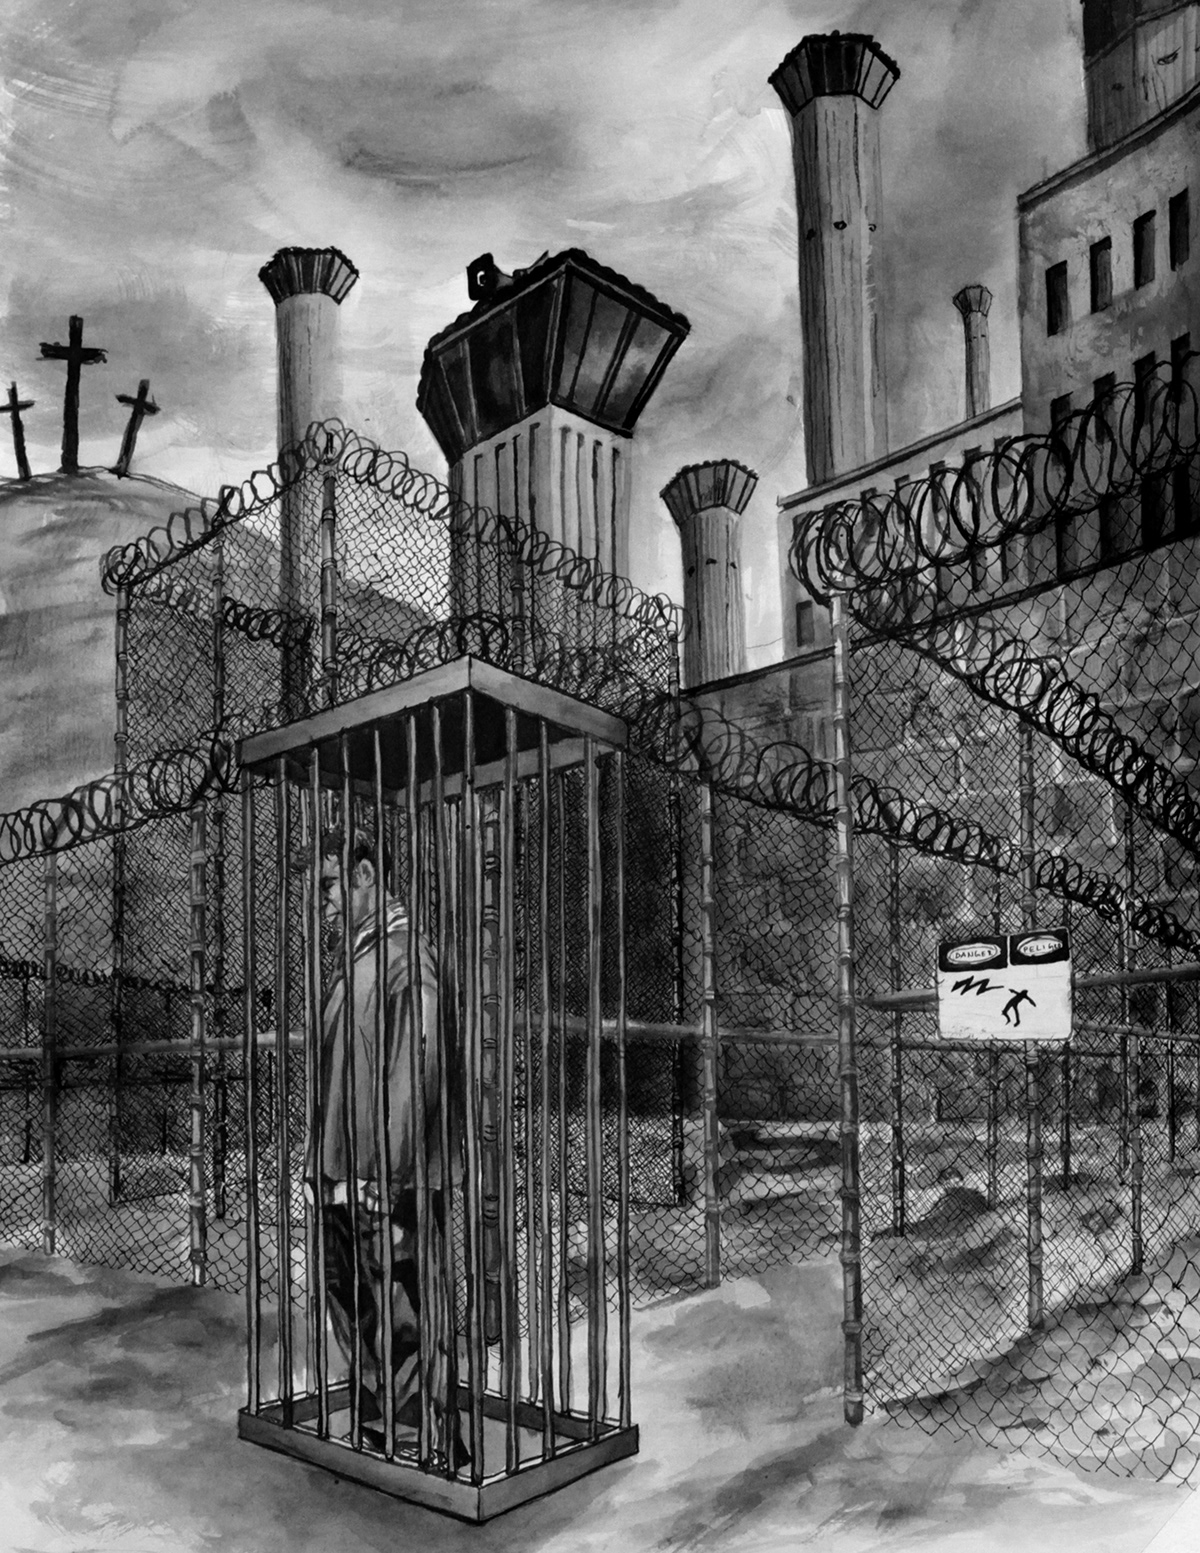 vicemagazine StavrosPavlidesArt StavrosPavlides HalfwayToNowhere FebruaryIssue prison HalfwayHouse St.Dimas ink inkonpaper